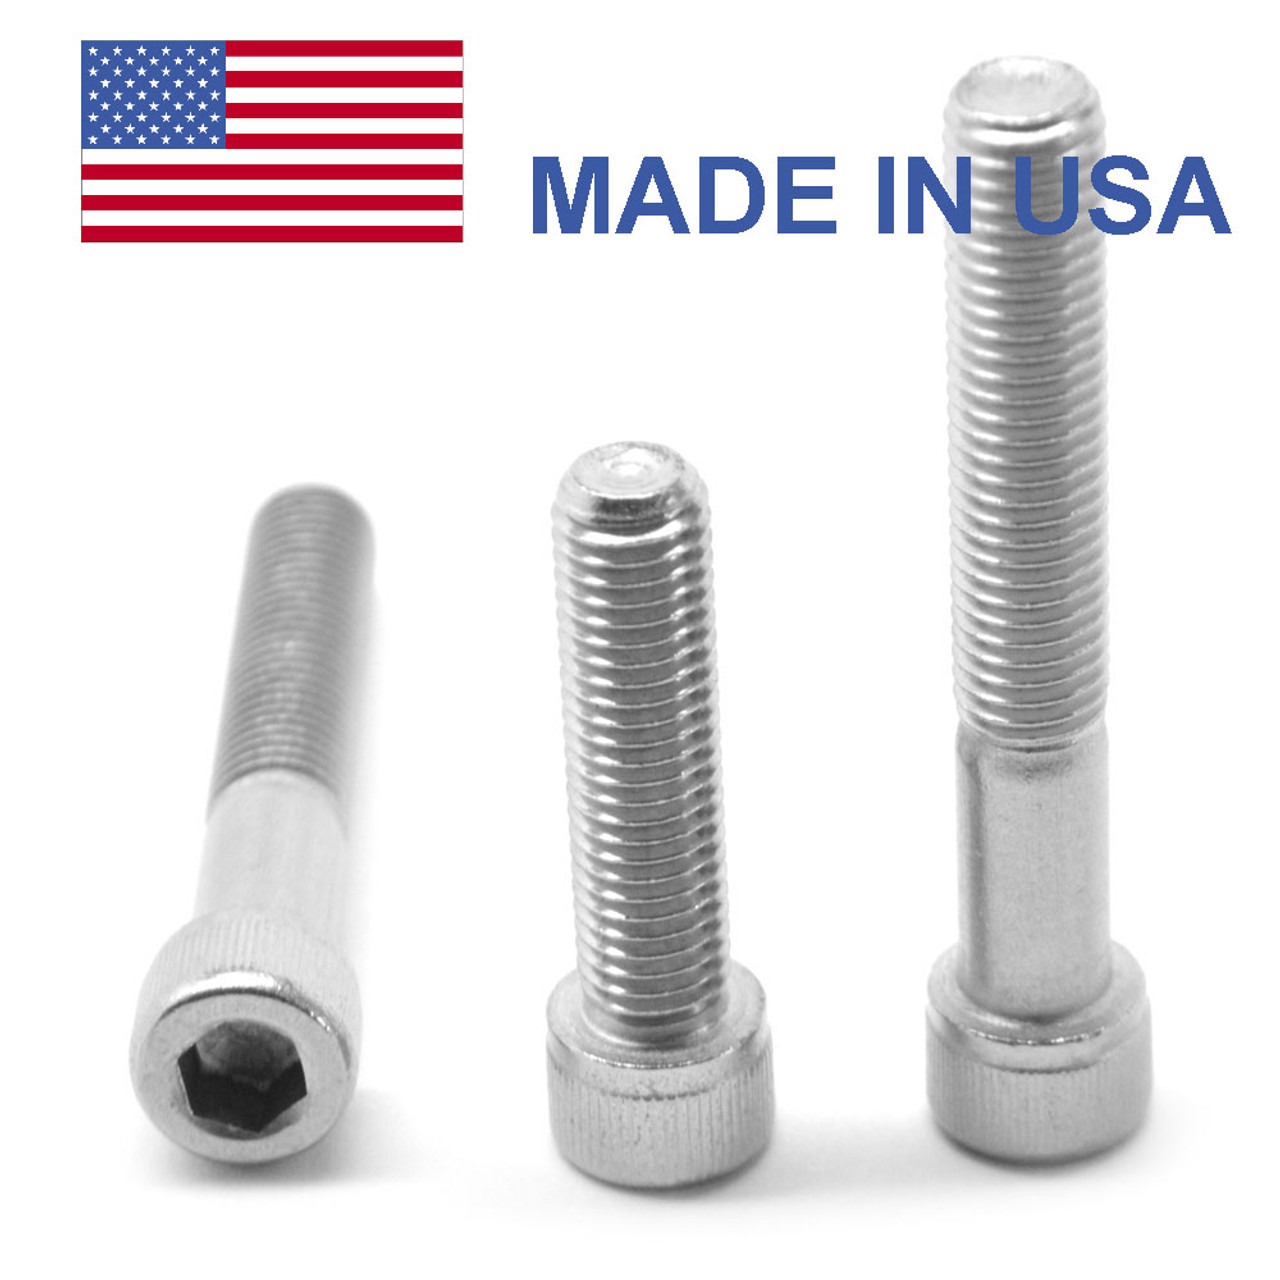 5/16-18 x 3/8 Coarse Thread Socket Head Cap Screw - USA Alloy Steel Zinc Plated